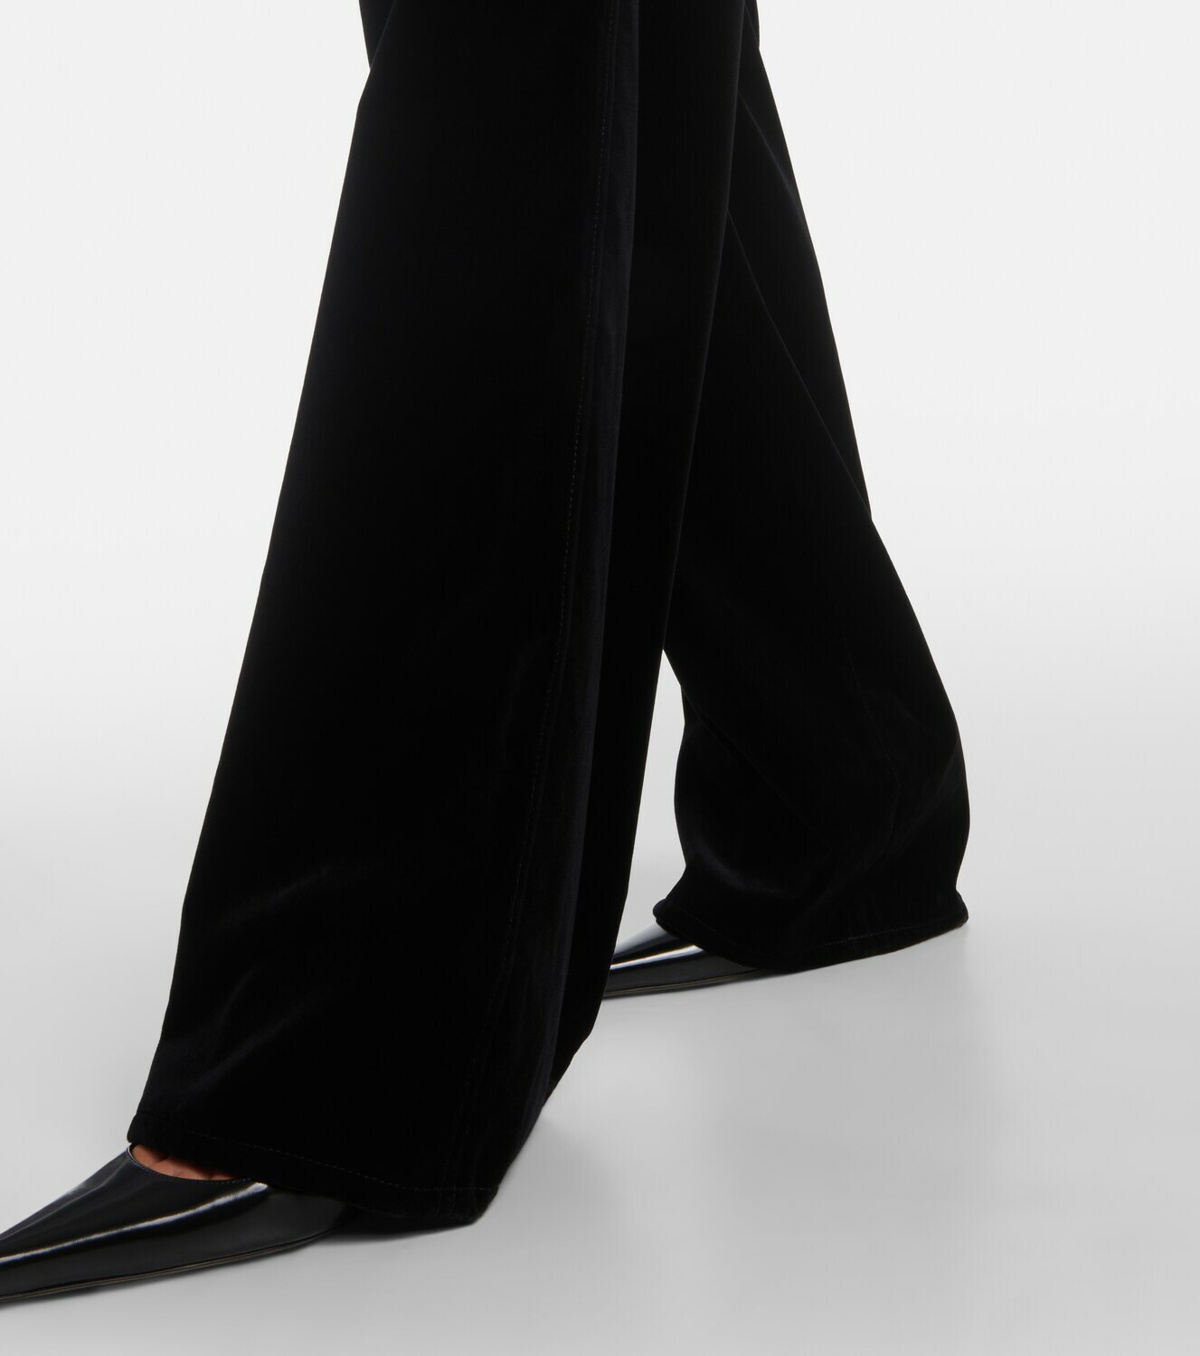 Shop Boden Women's Velvet Trousers up to 40% Off | DealDoodle